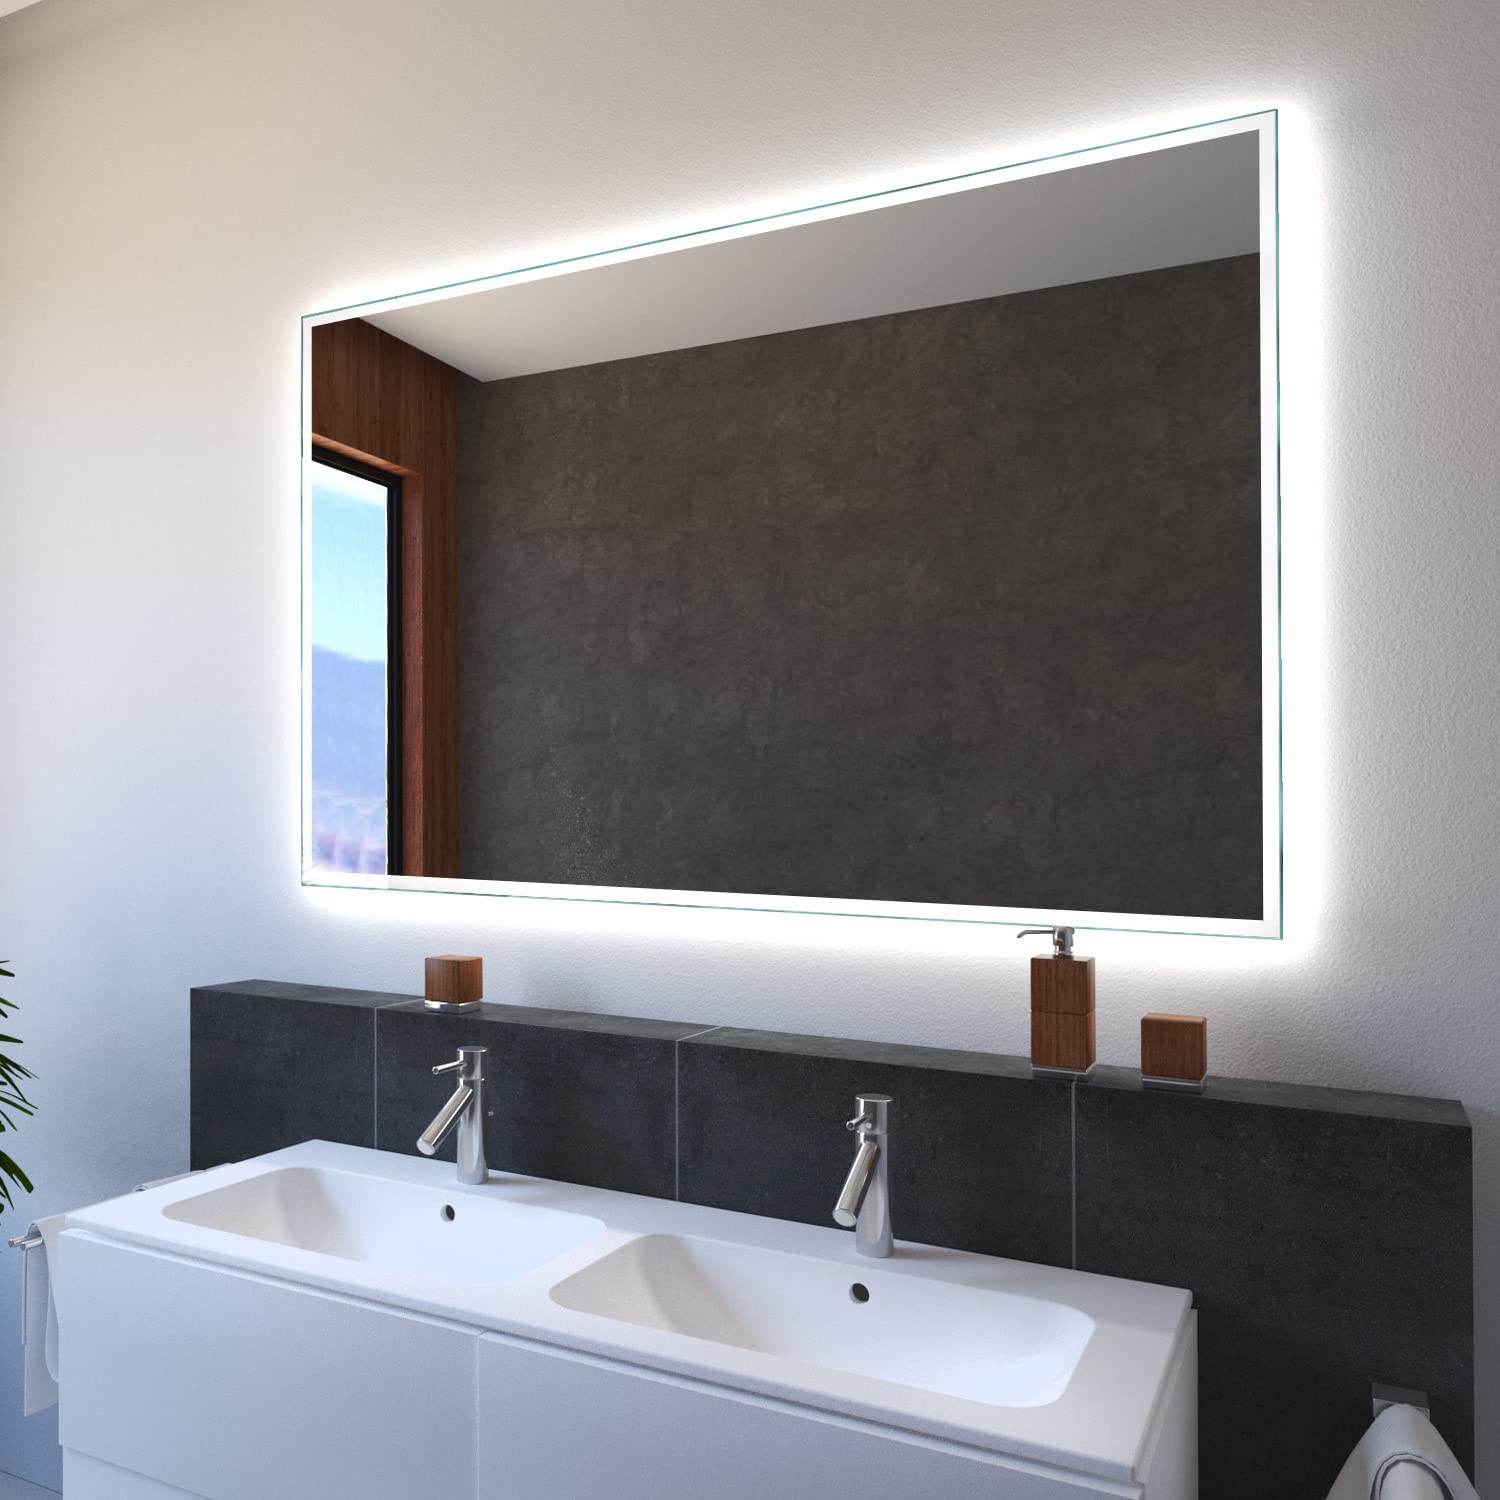 SARAR Wandspiegel mit schmaler rundum LED-Beleuchtung 60x100cm Made in Germany Designo MA4111 Badspiegel Spiegel mit Beleuchtung Badezimmerspiegel nach-auf Maß